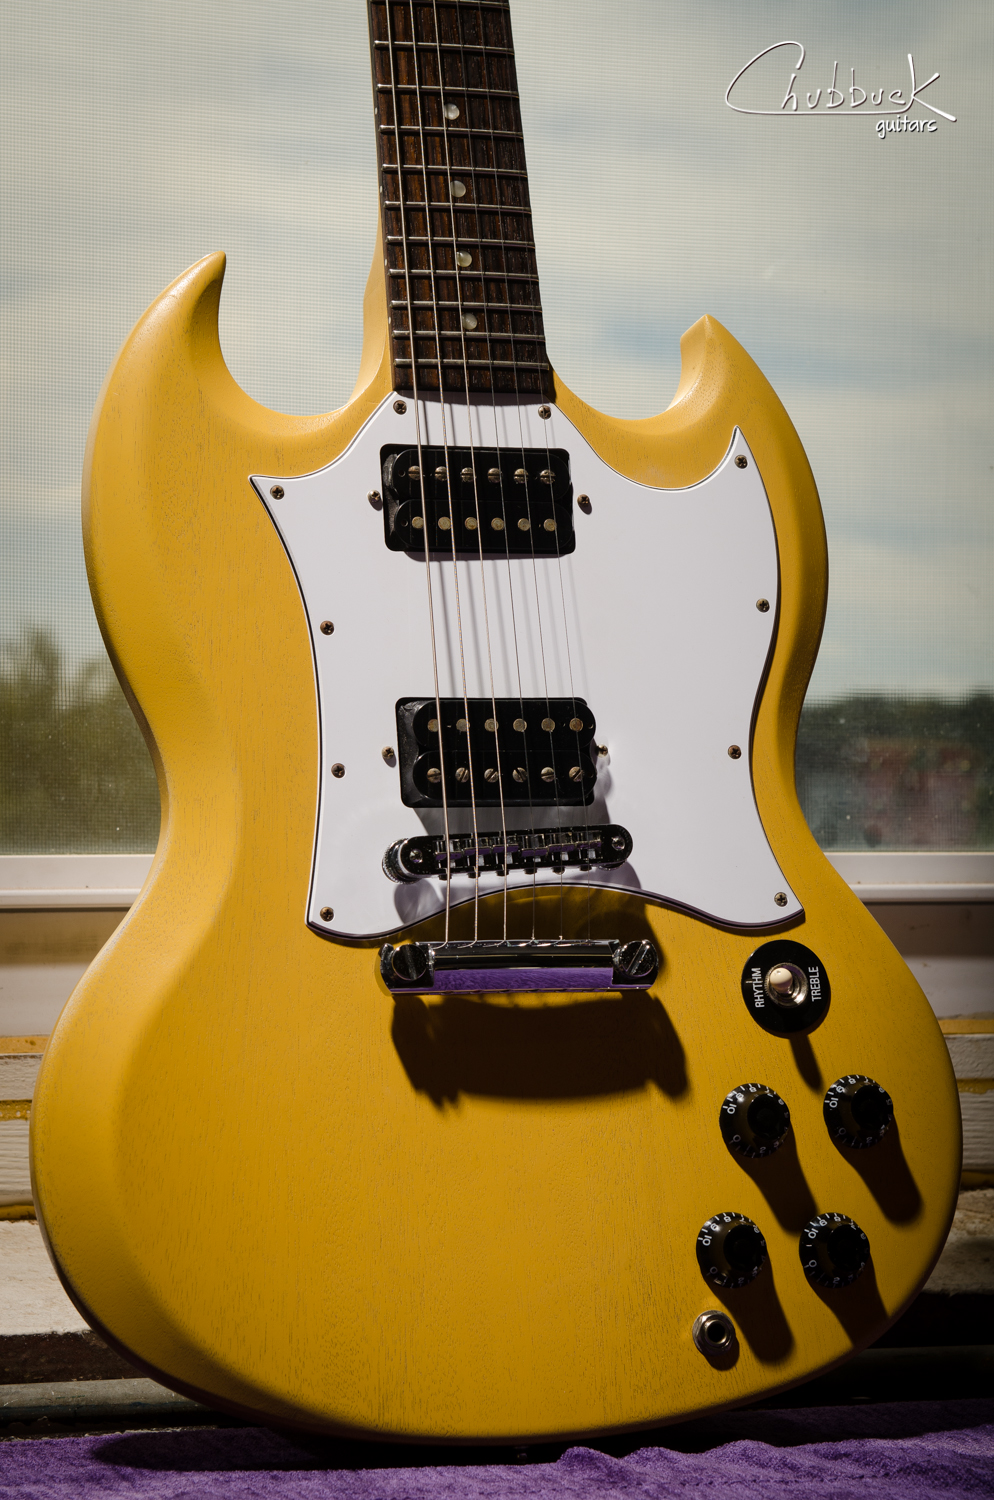 2007 Gibson SG TV yellow [6.9 lbs] rusty fret setup